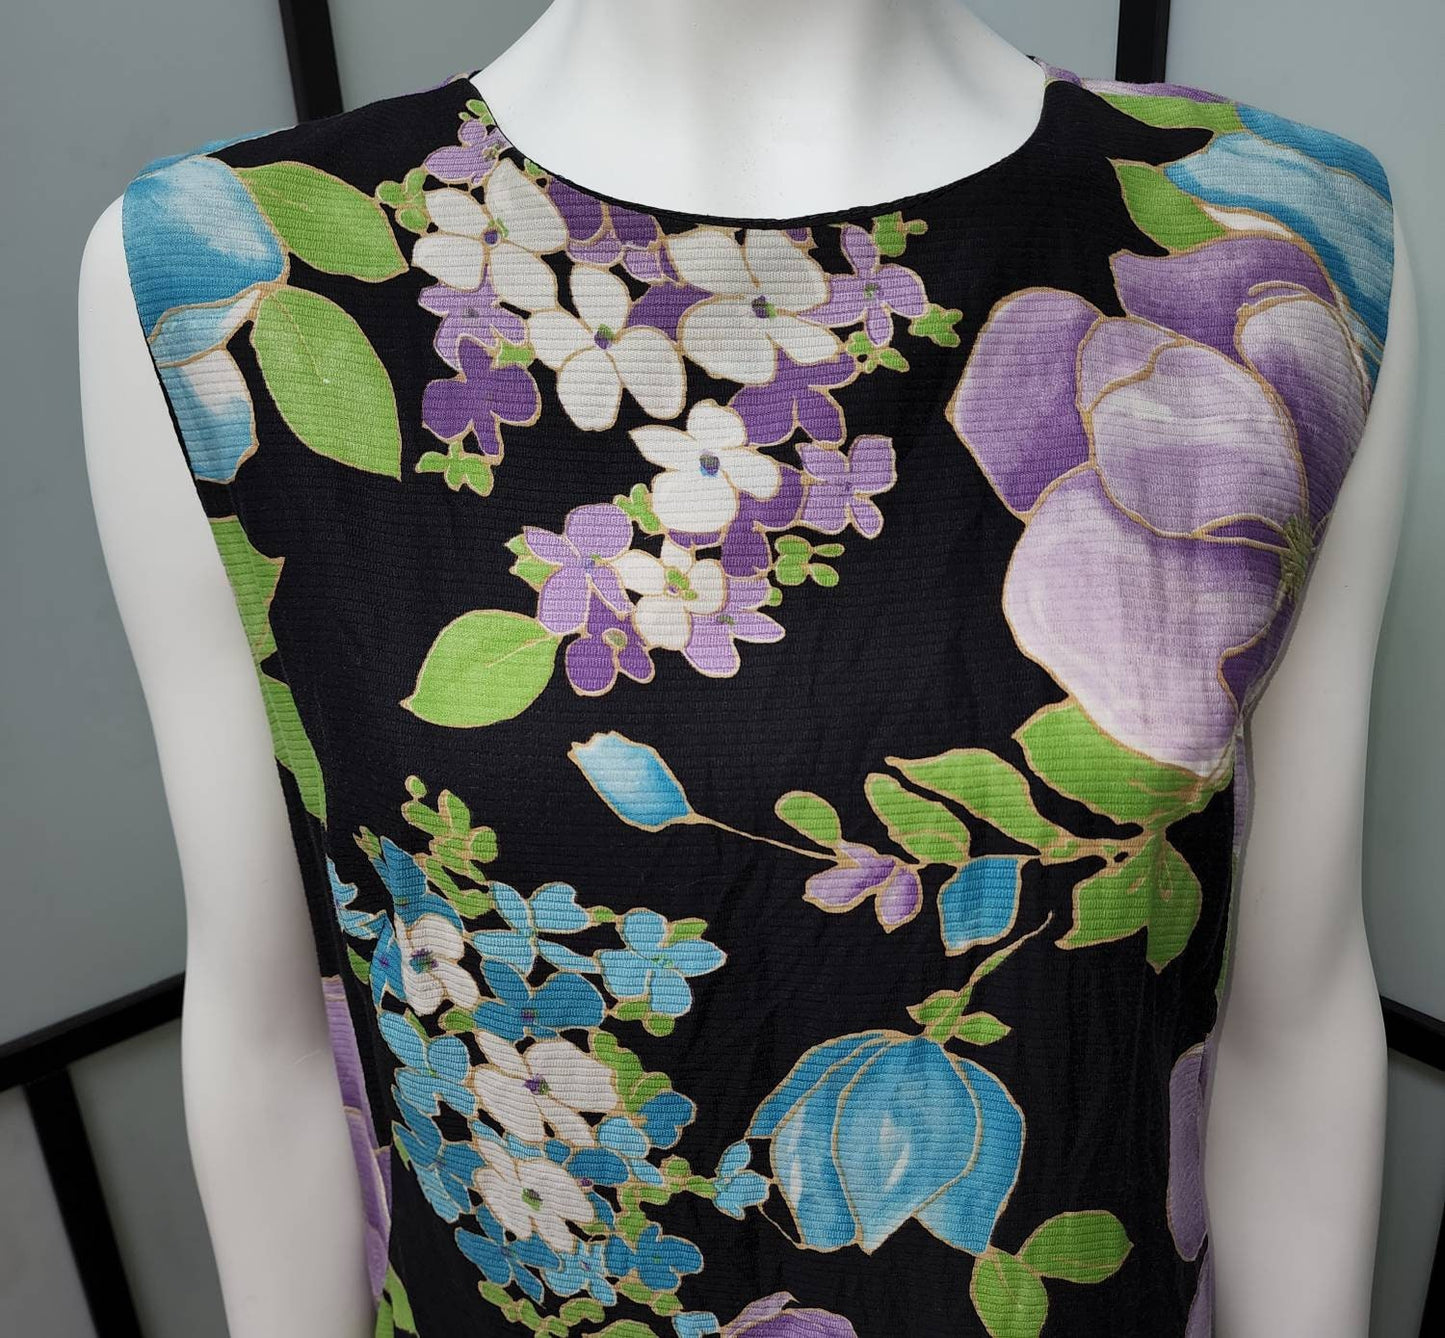 Vintage Shift Dress 1960s Cotton Blend Black Purple Large Floral Print Dress Mod Boho L